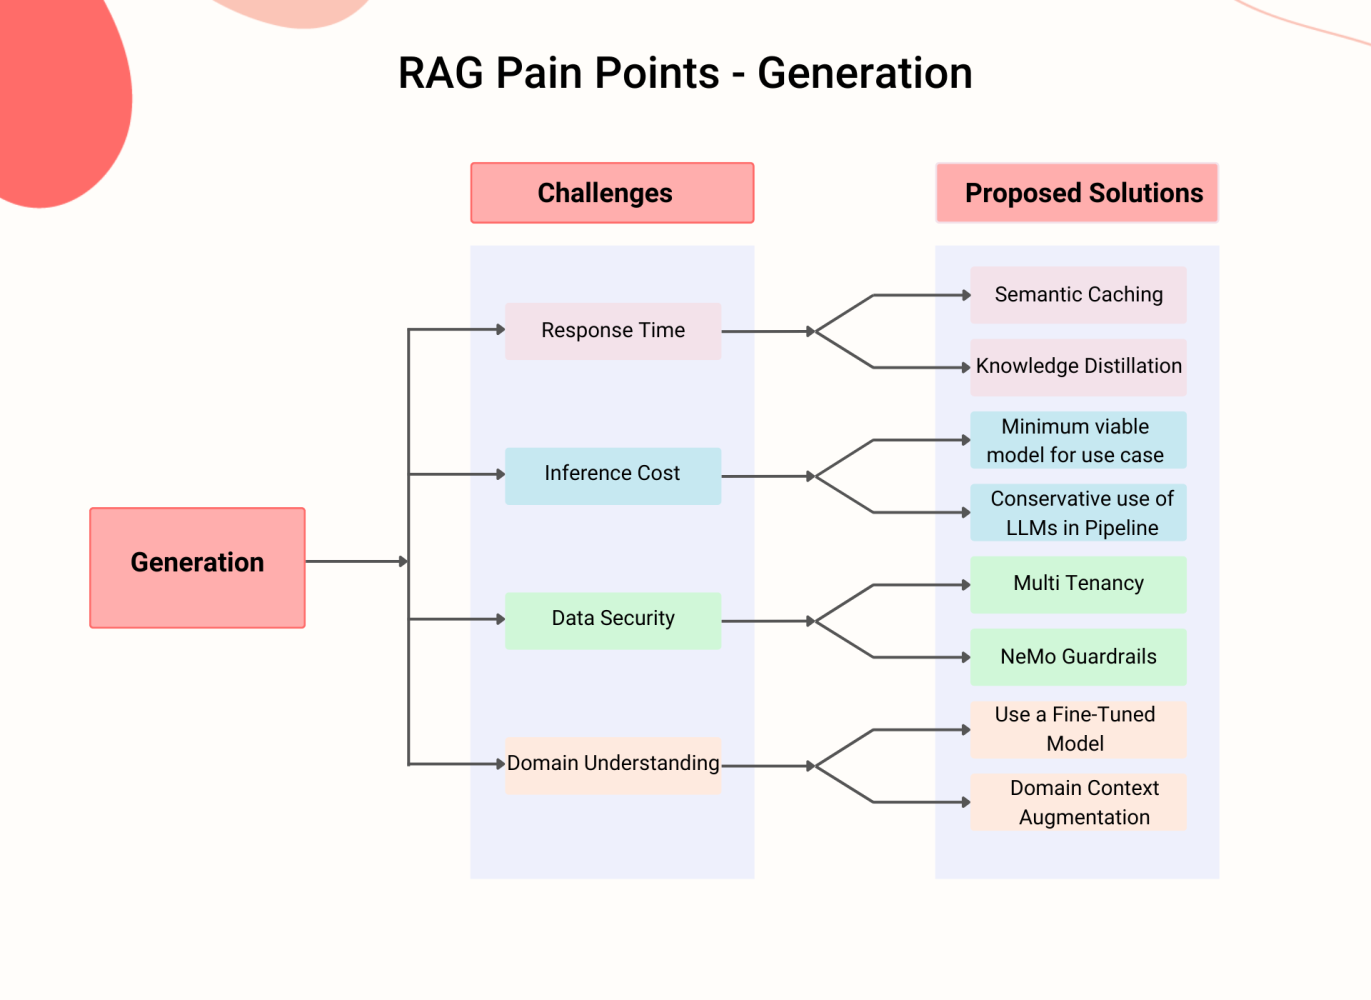 RAG model - Pain Points - Generation